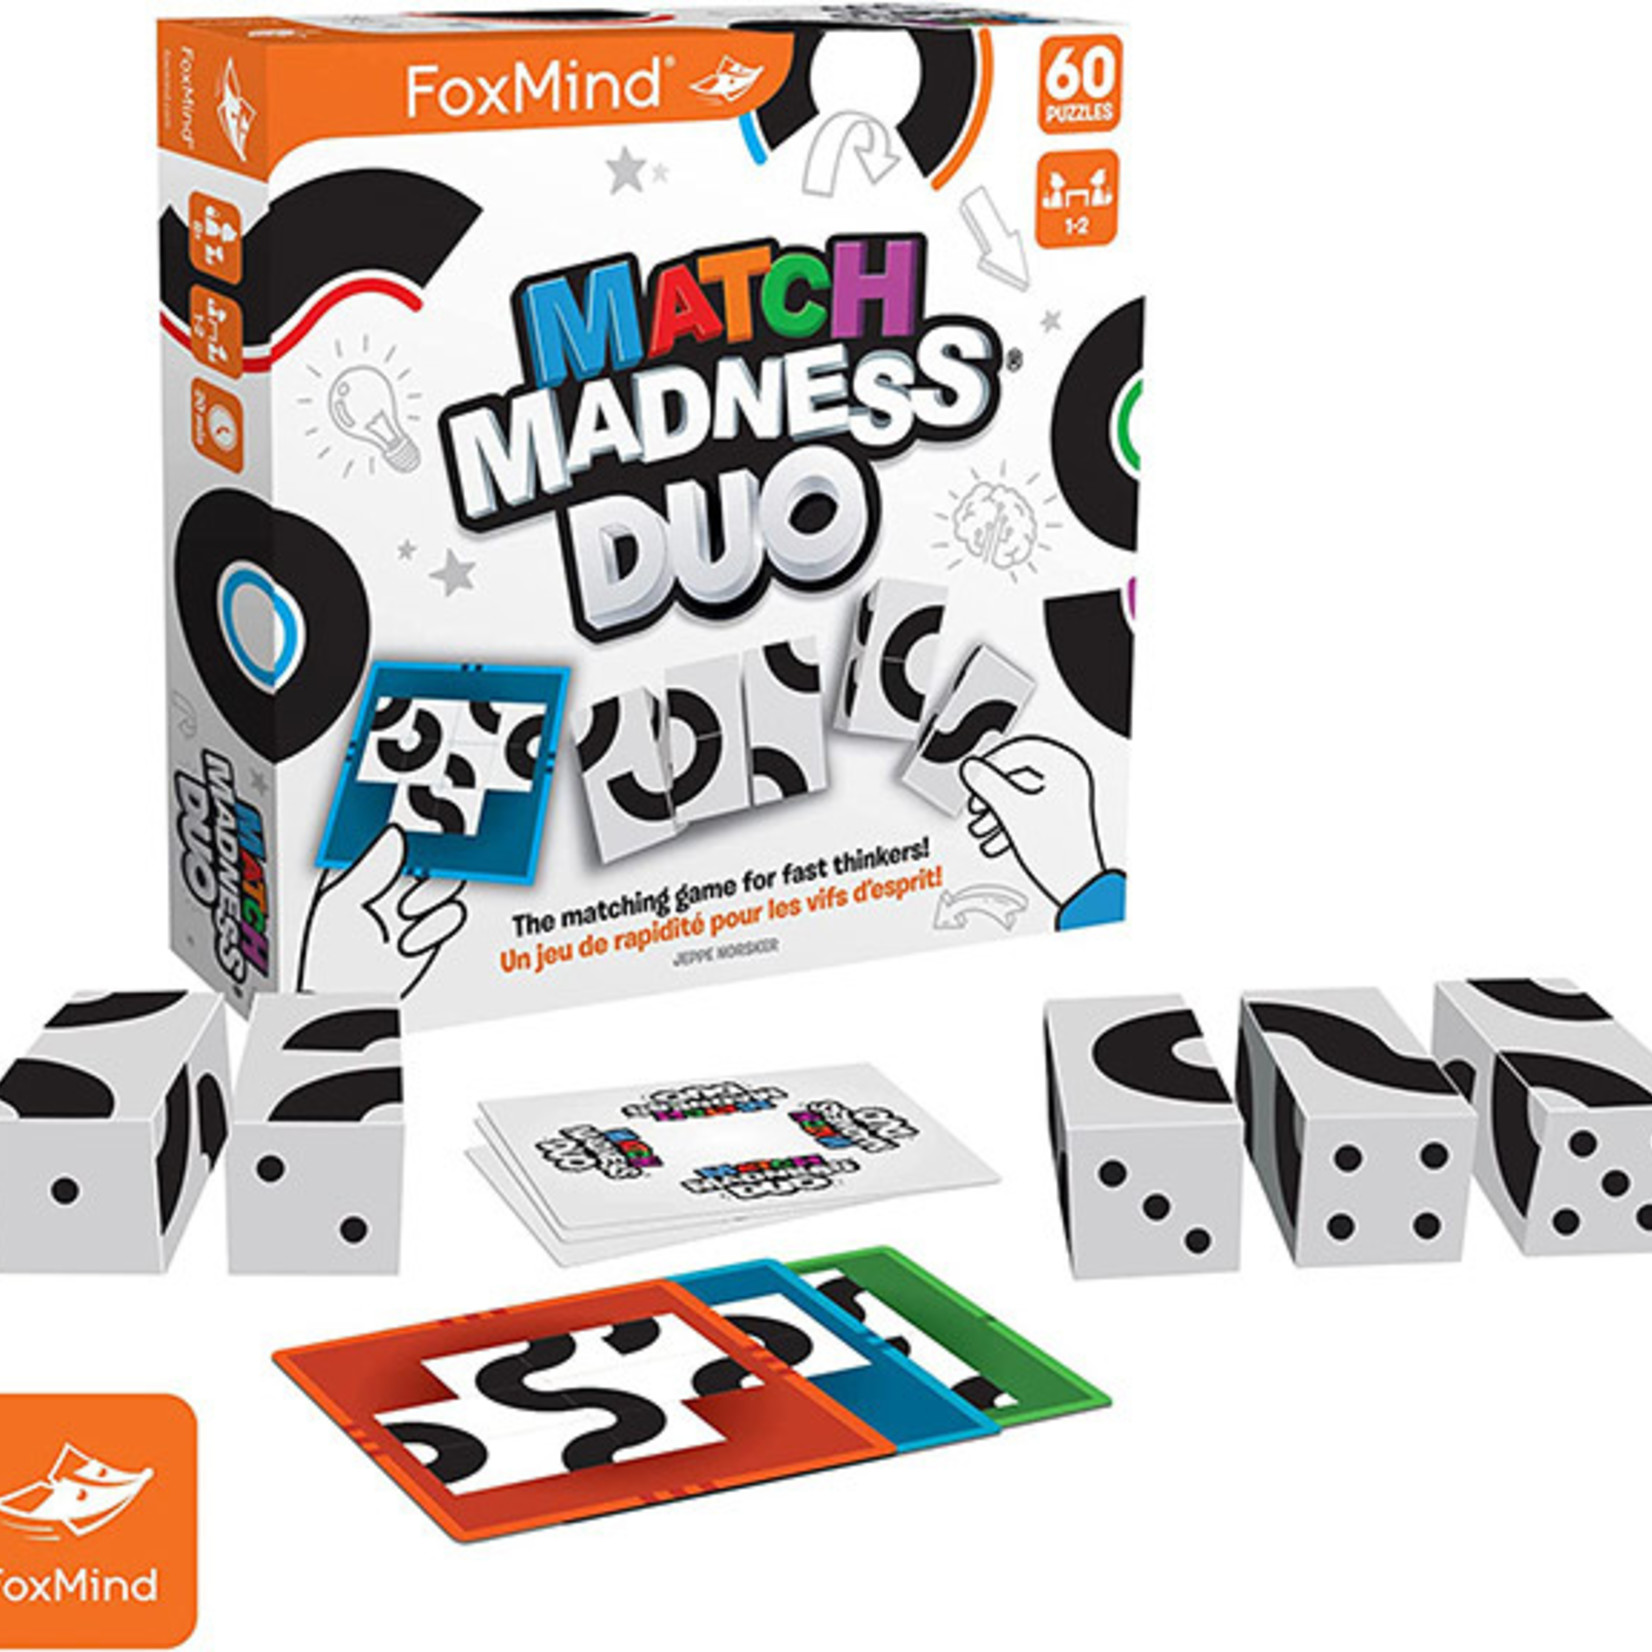 FoxMind Match Madness Duo